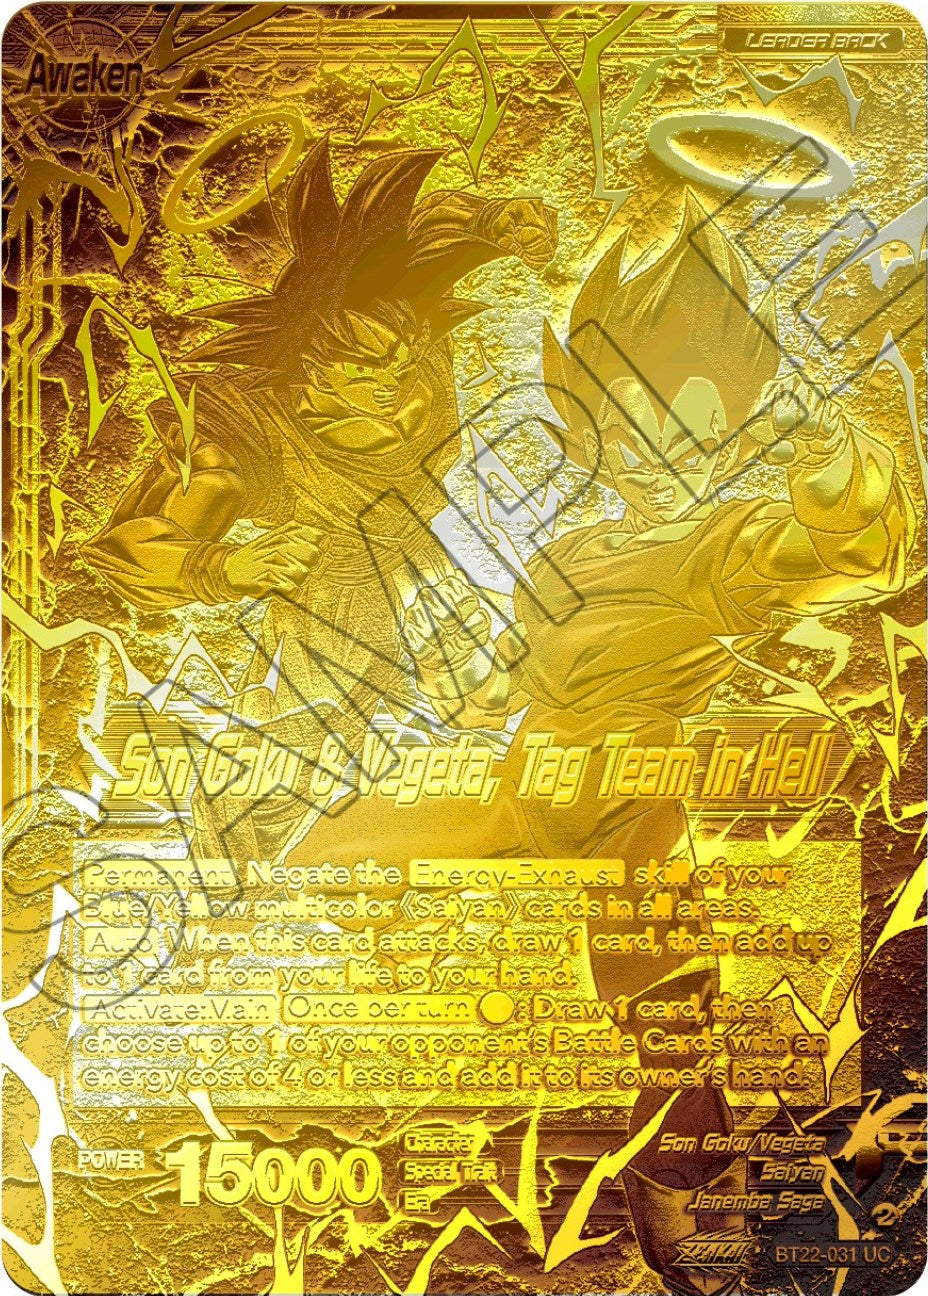 Son Goku // Son Goku & Vegeta, Tag Team in Hell (2023 Championship Finals) (Gold Metal Foil) (BT22-031) [Tournament Promotion Cards] | Devastation Store